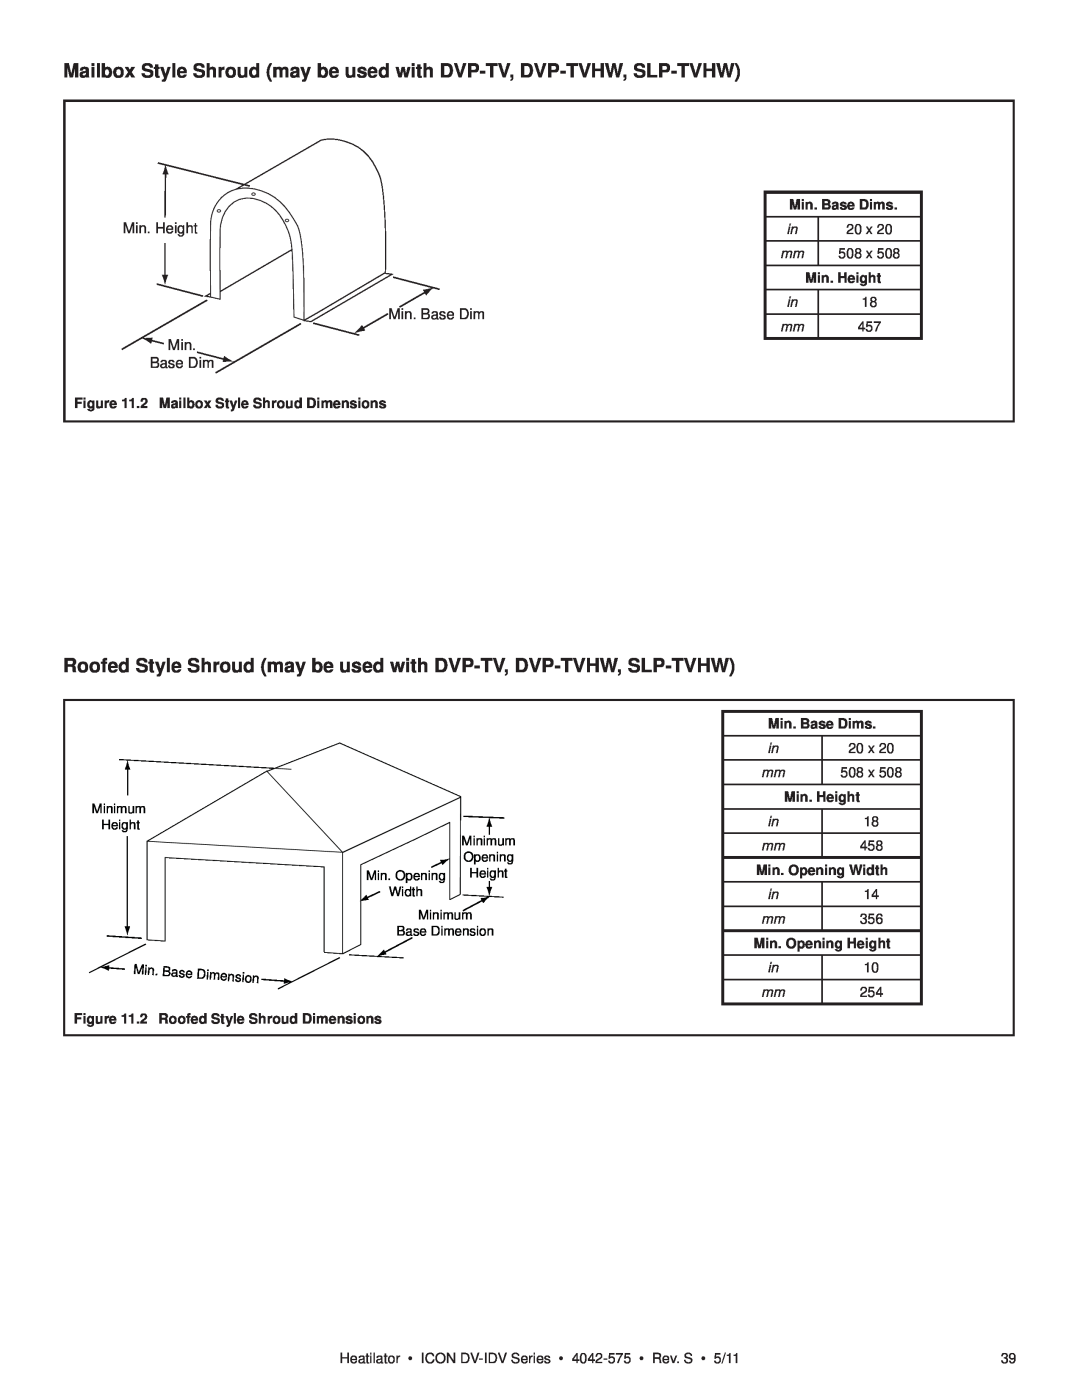 Heatiator IDV4833IT Min. Height Min. Base Dim Min Base Dim, 2 Mailbox Style Shroud Dimensions, Min. Base Dims, mm508 x 